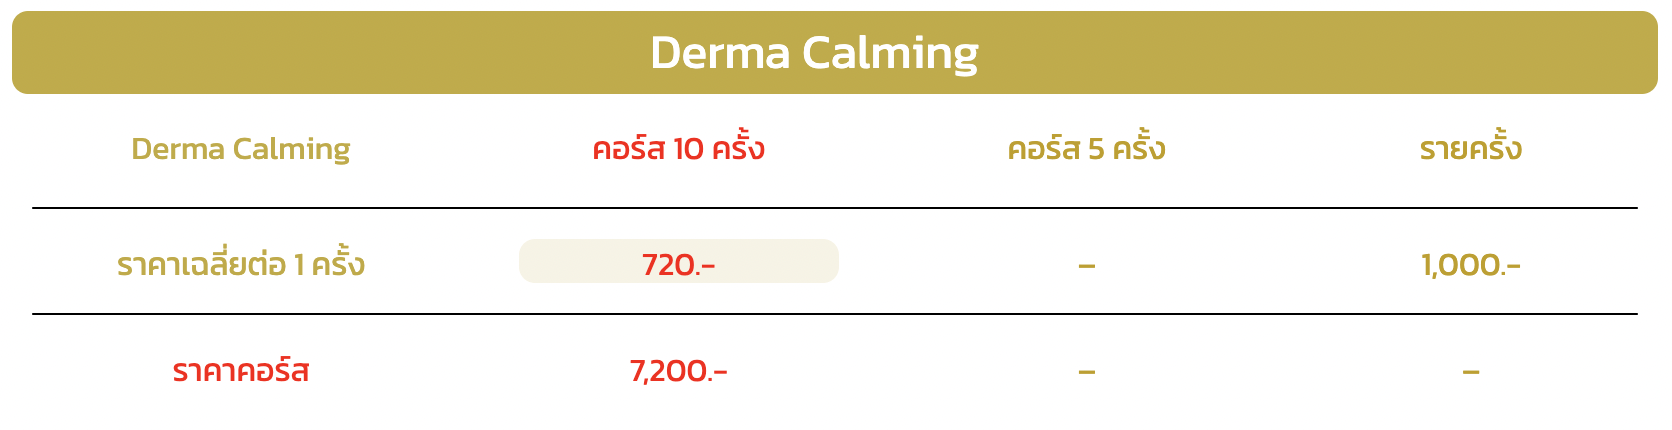 Derma Calming ผิวแพ้